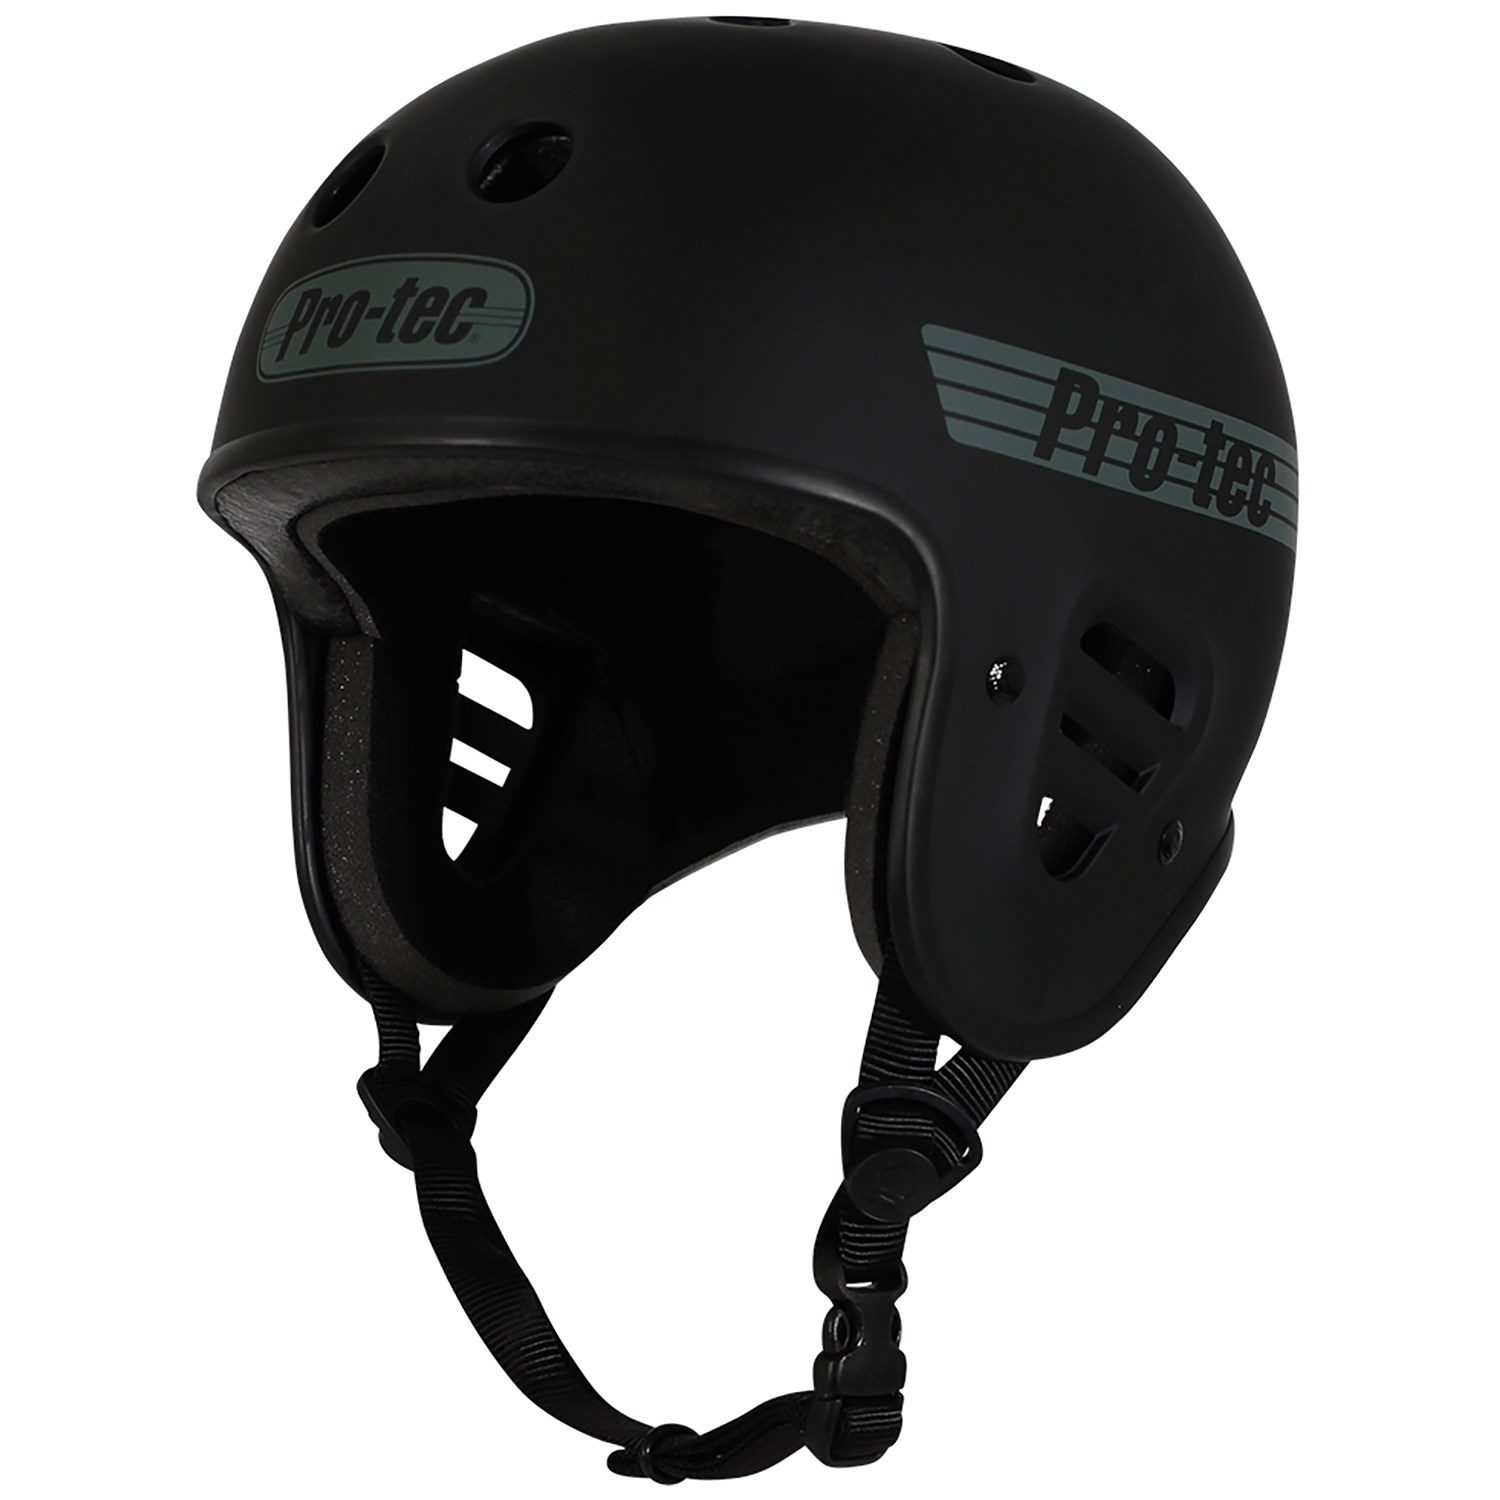 Matte Bright Red Pro-Tec Full Cut Certified Helmet 